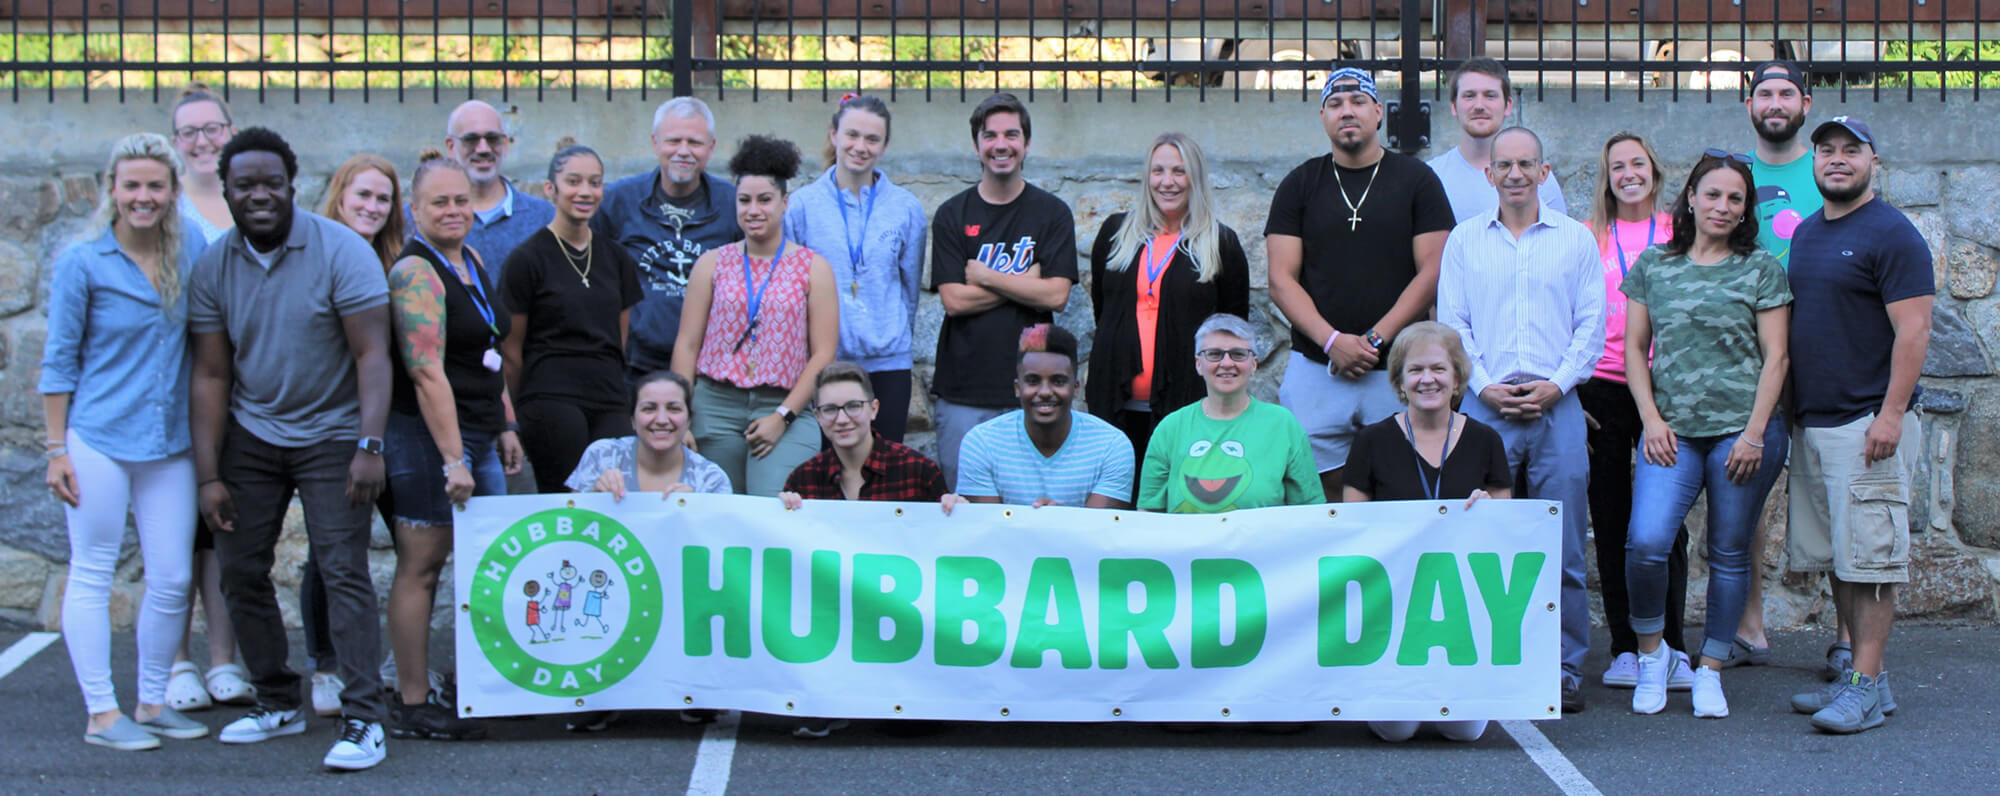 Harbor Point Hubbard Day